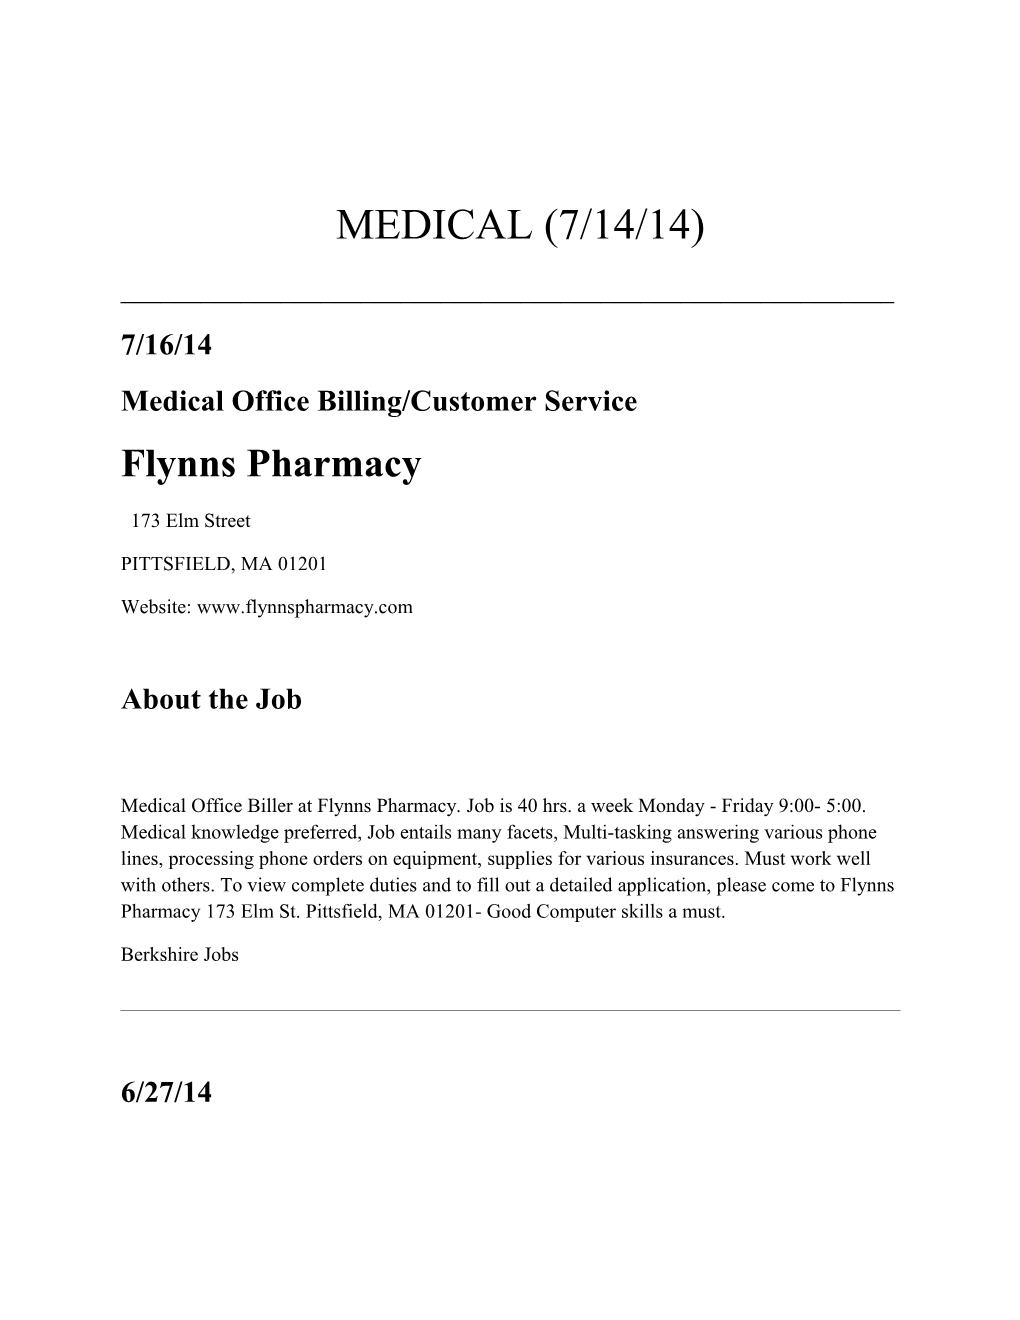 Medical Office Billing/Customer Service